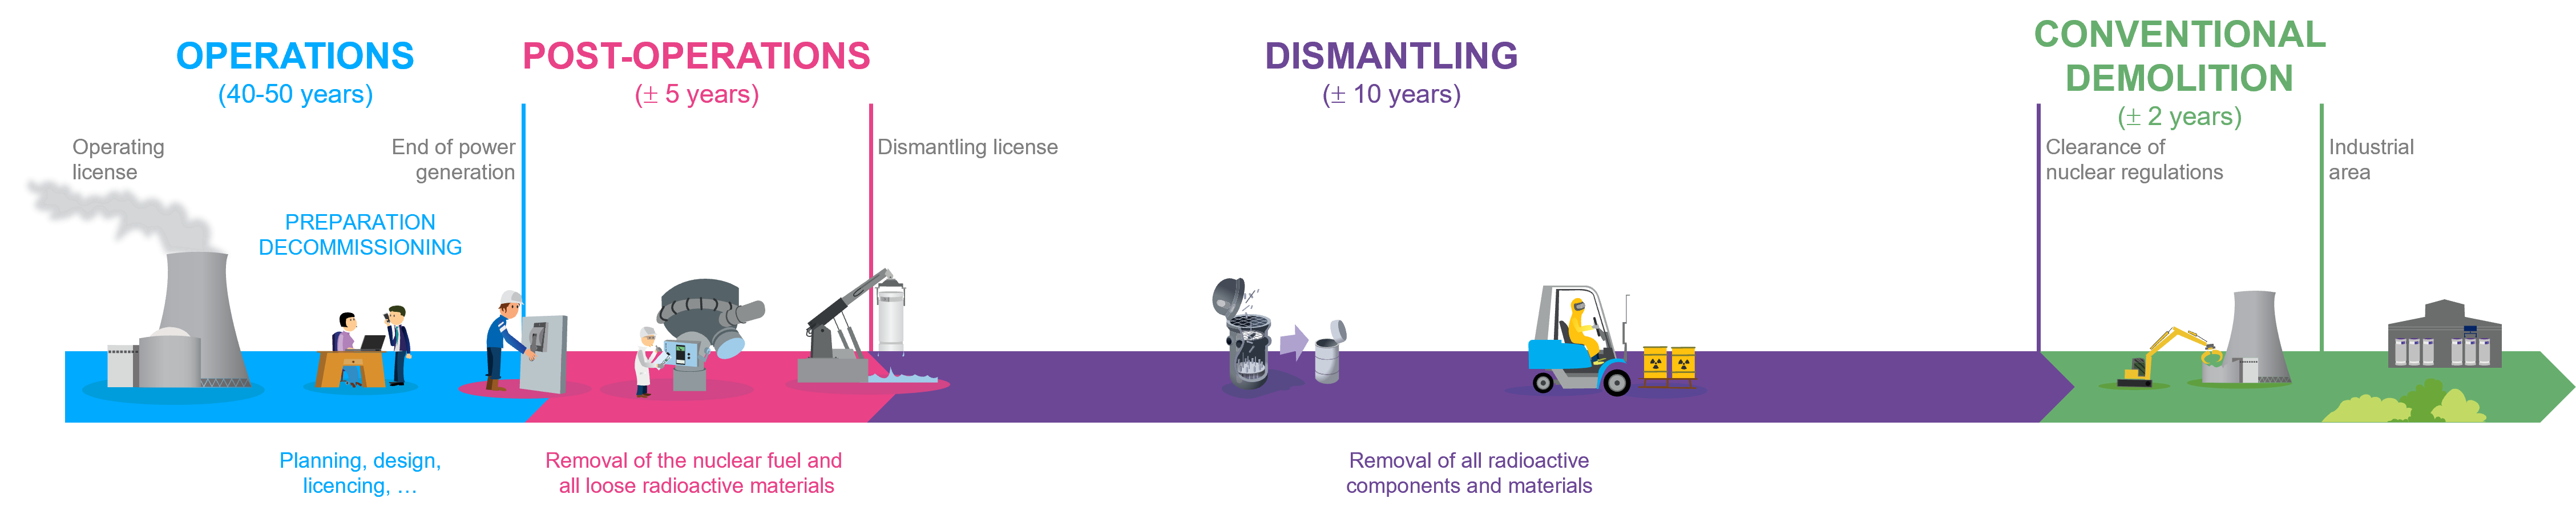 Decommissioning timeline